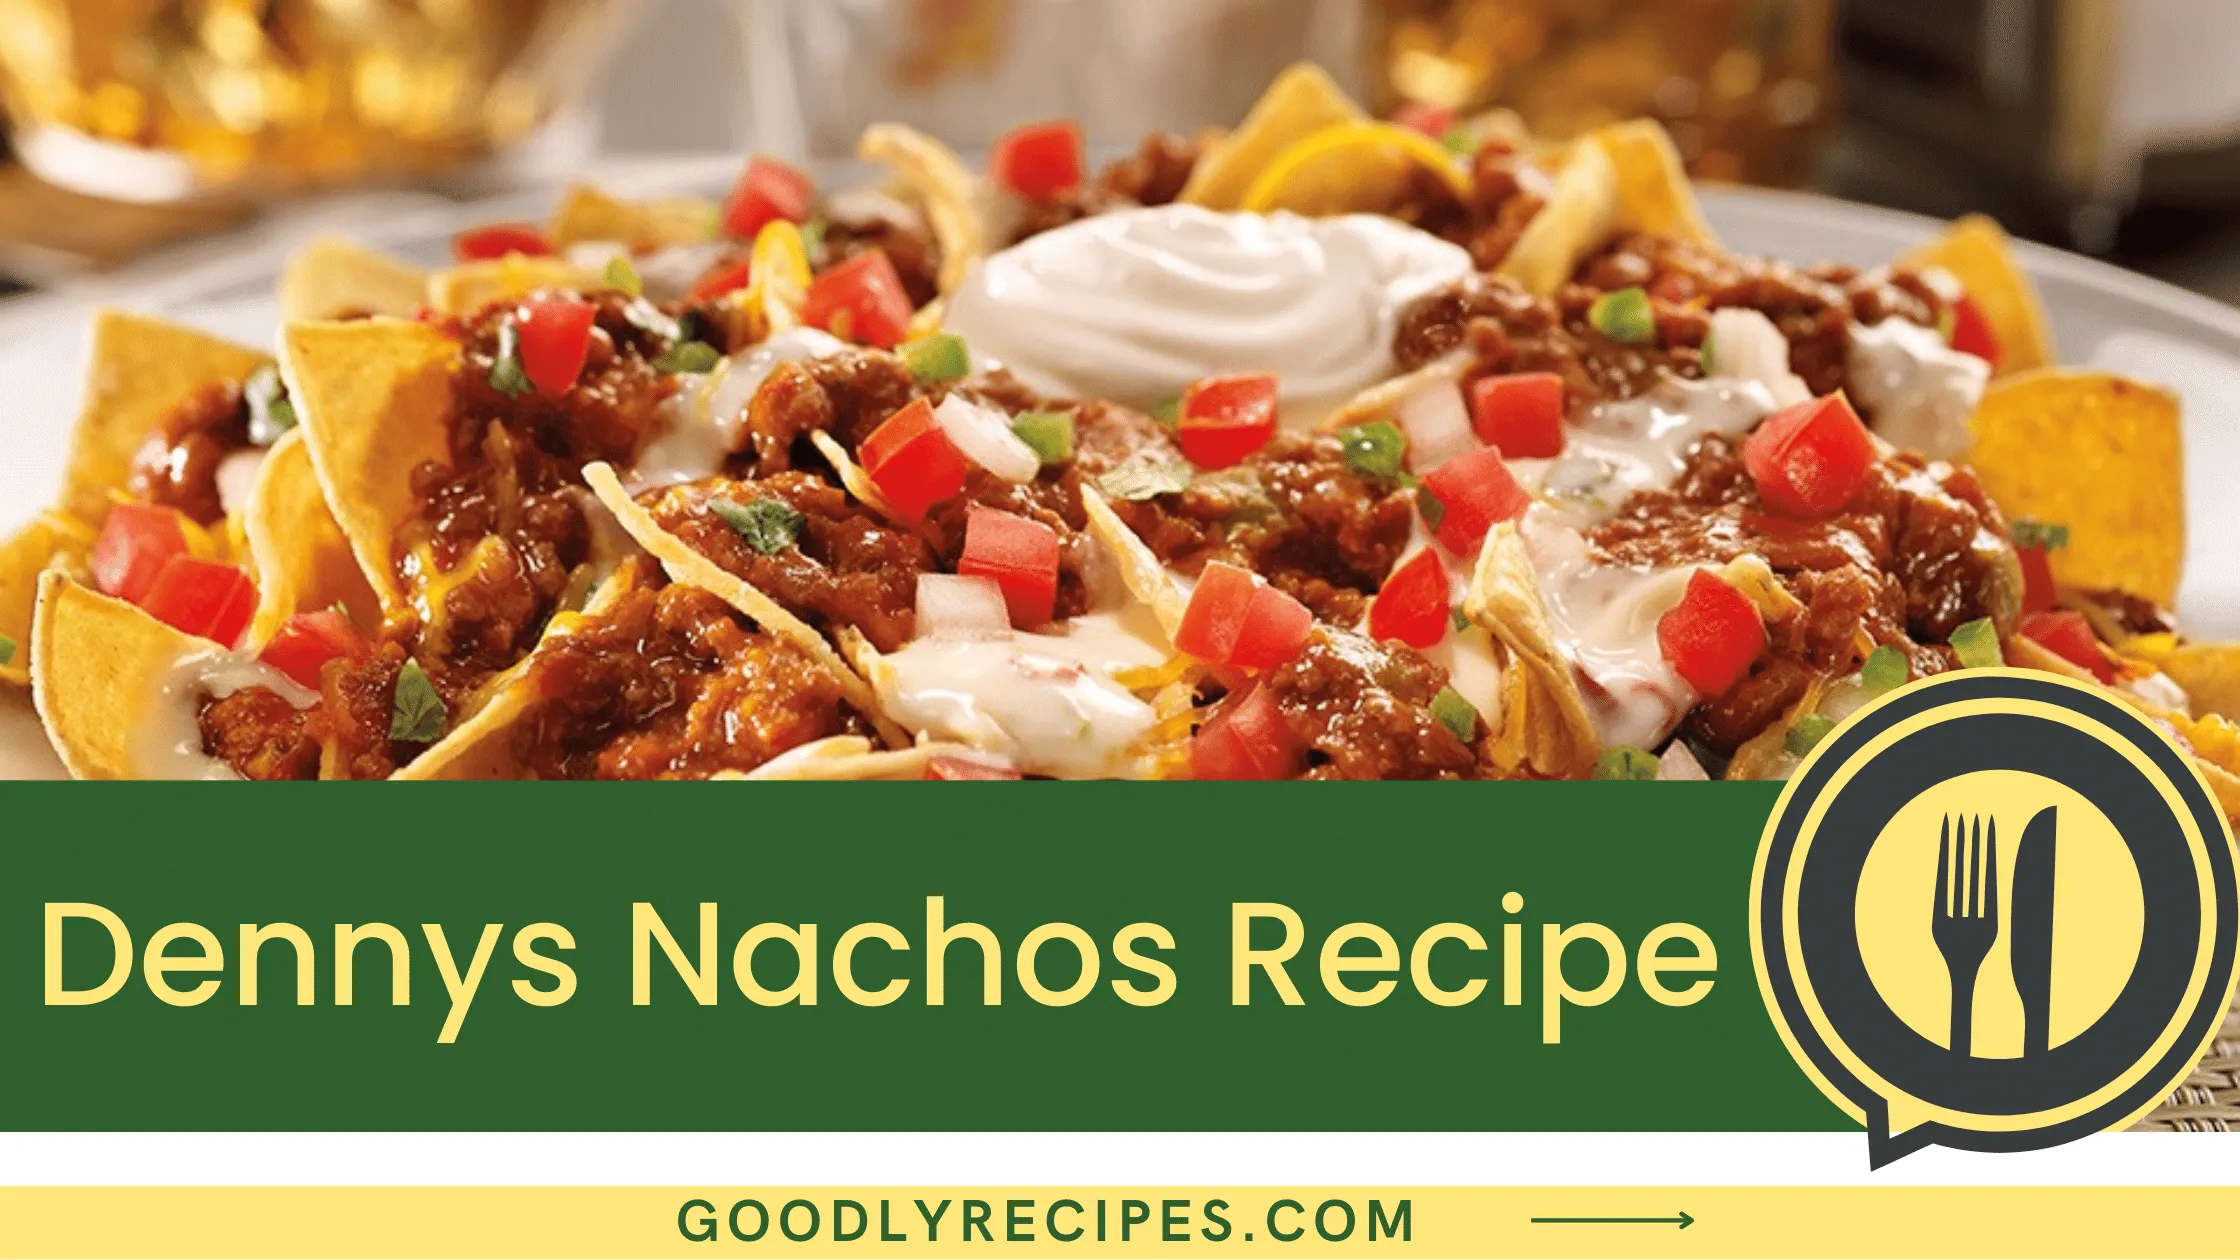 Denny's Nachos Recipe